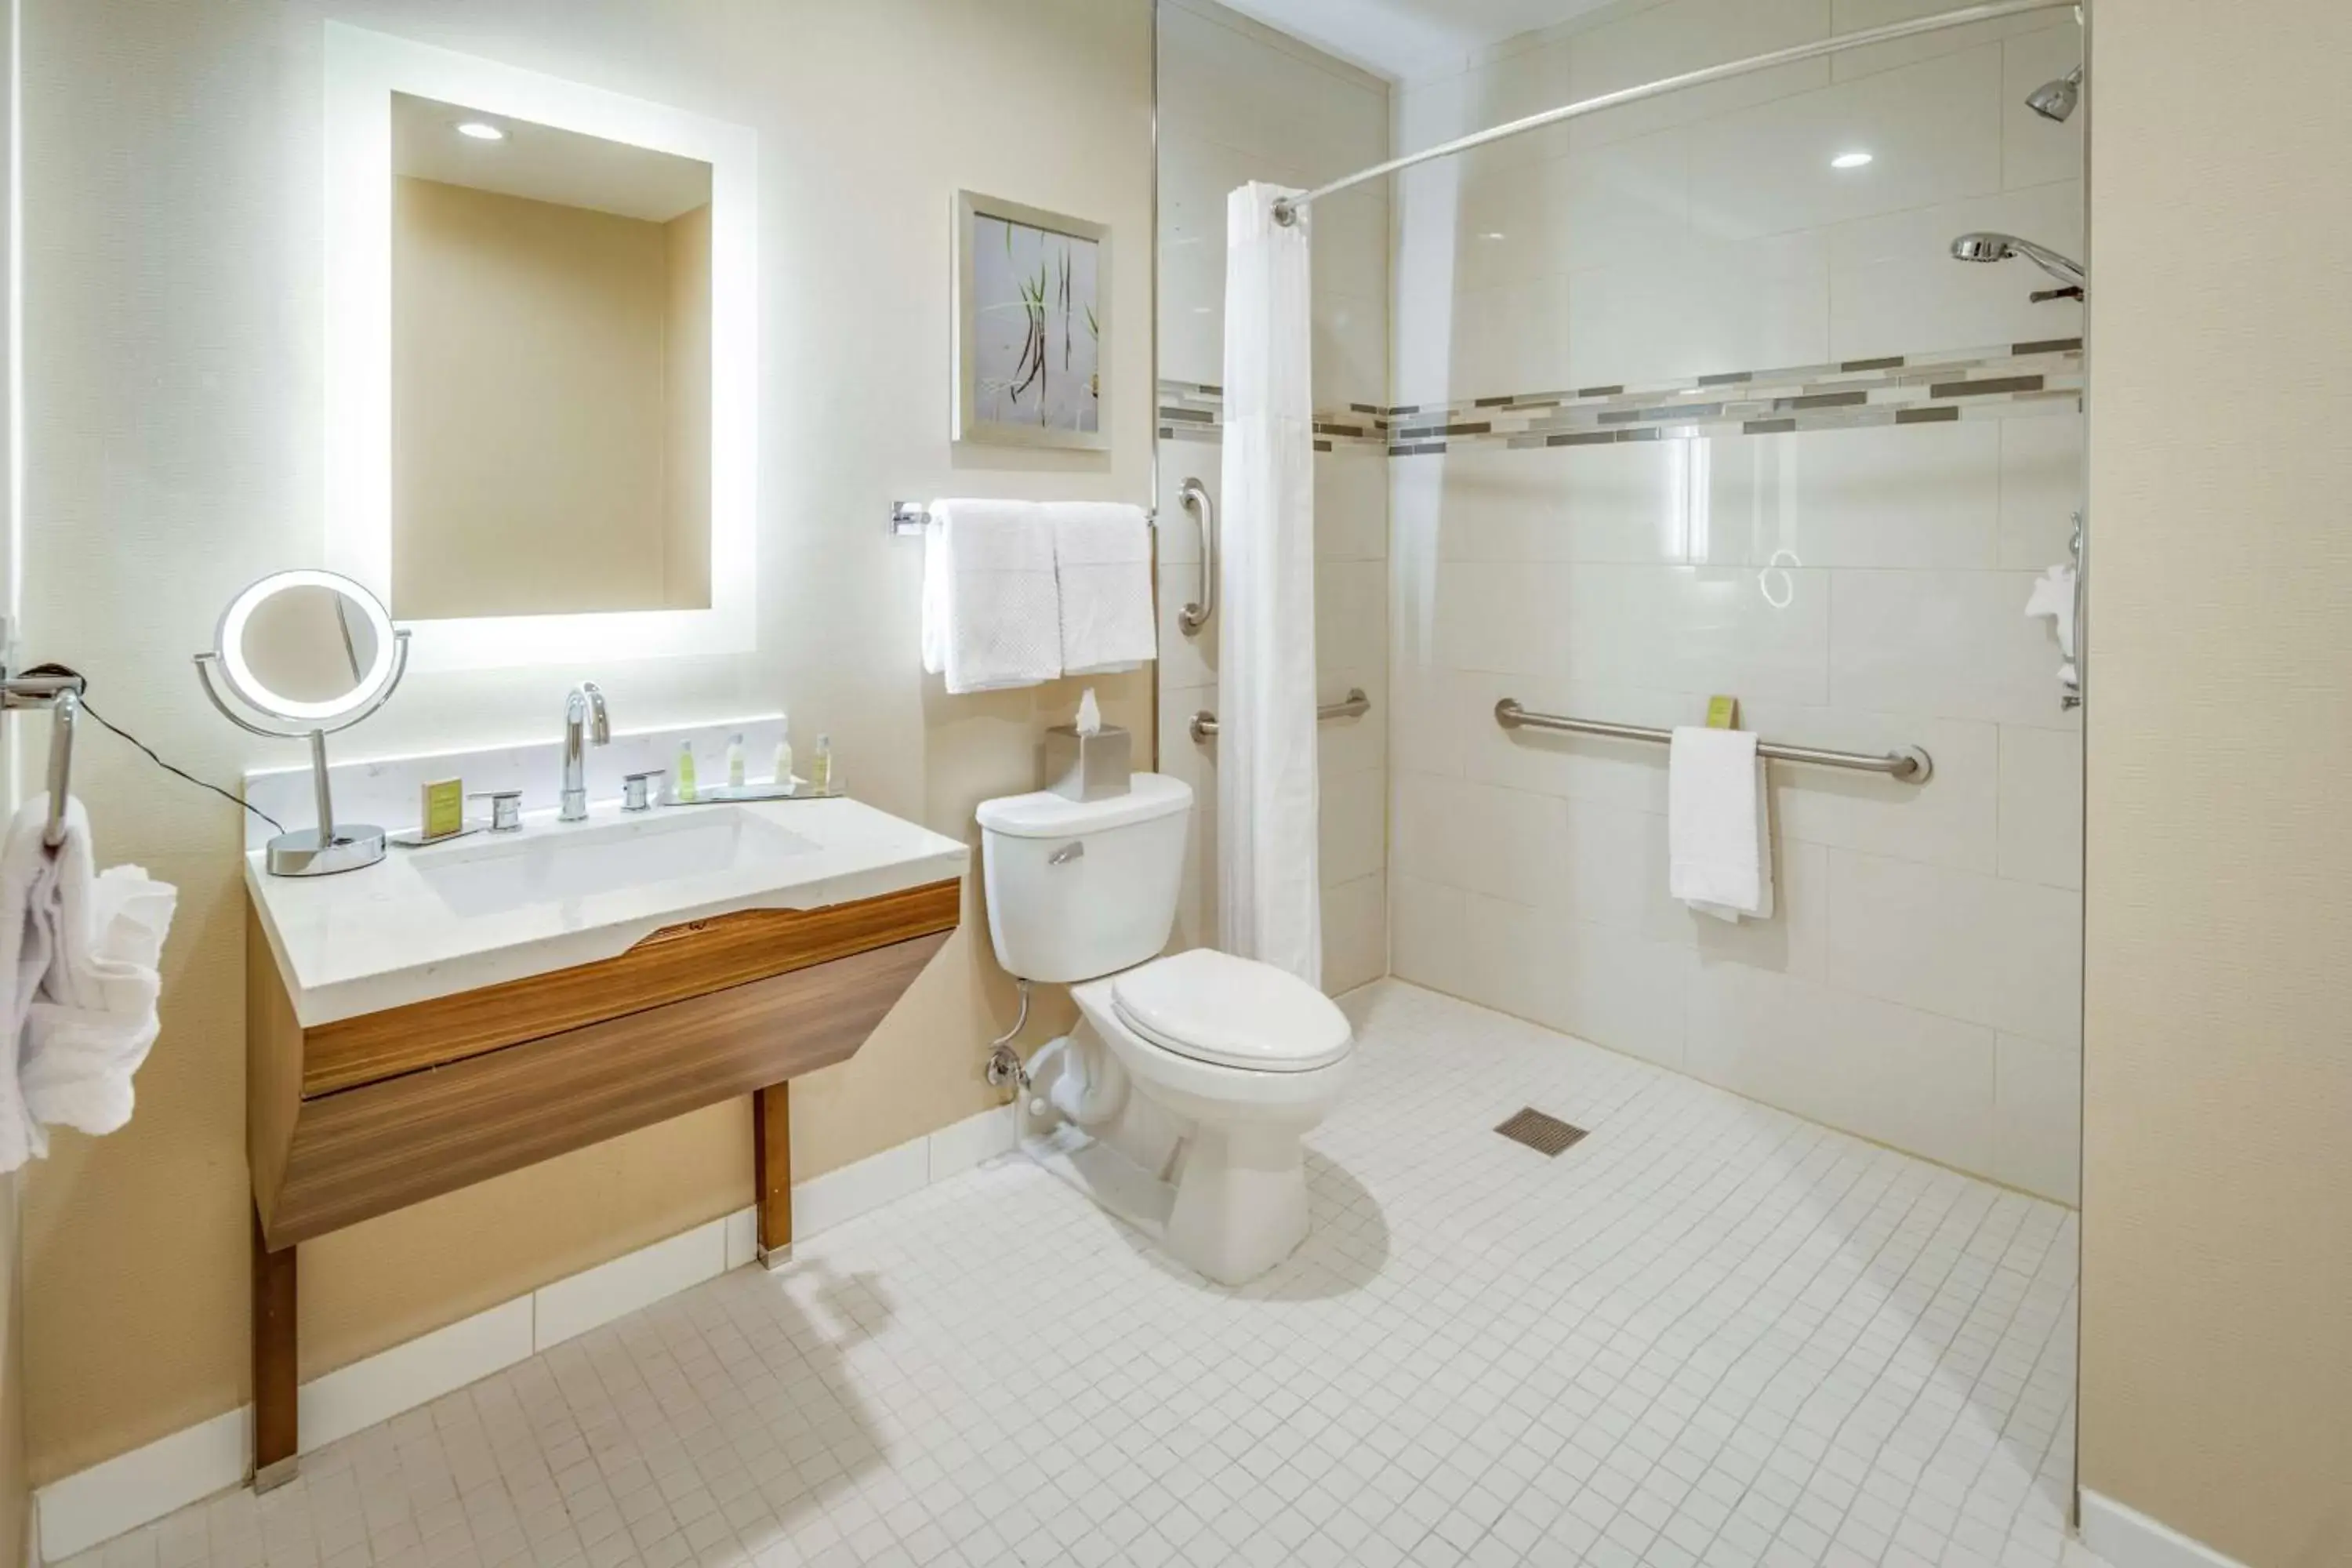 Bathroom in DoubleTree by Hilton Huntington, WV